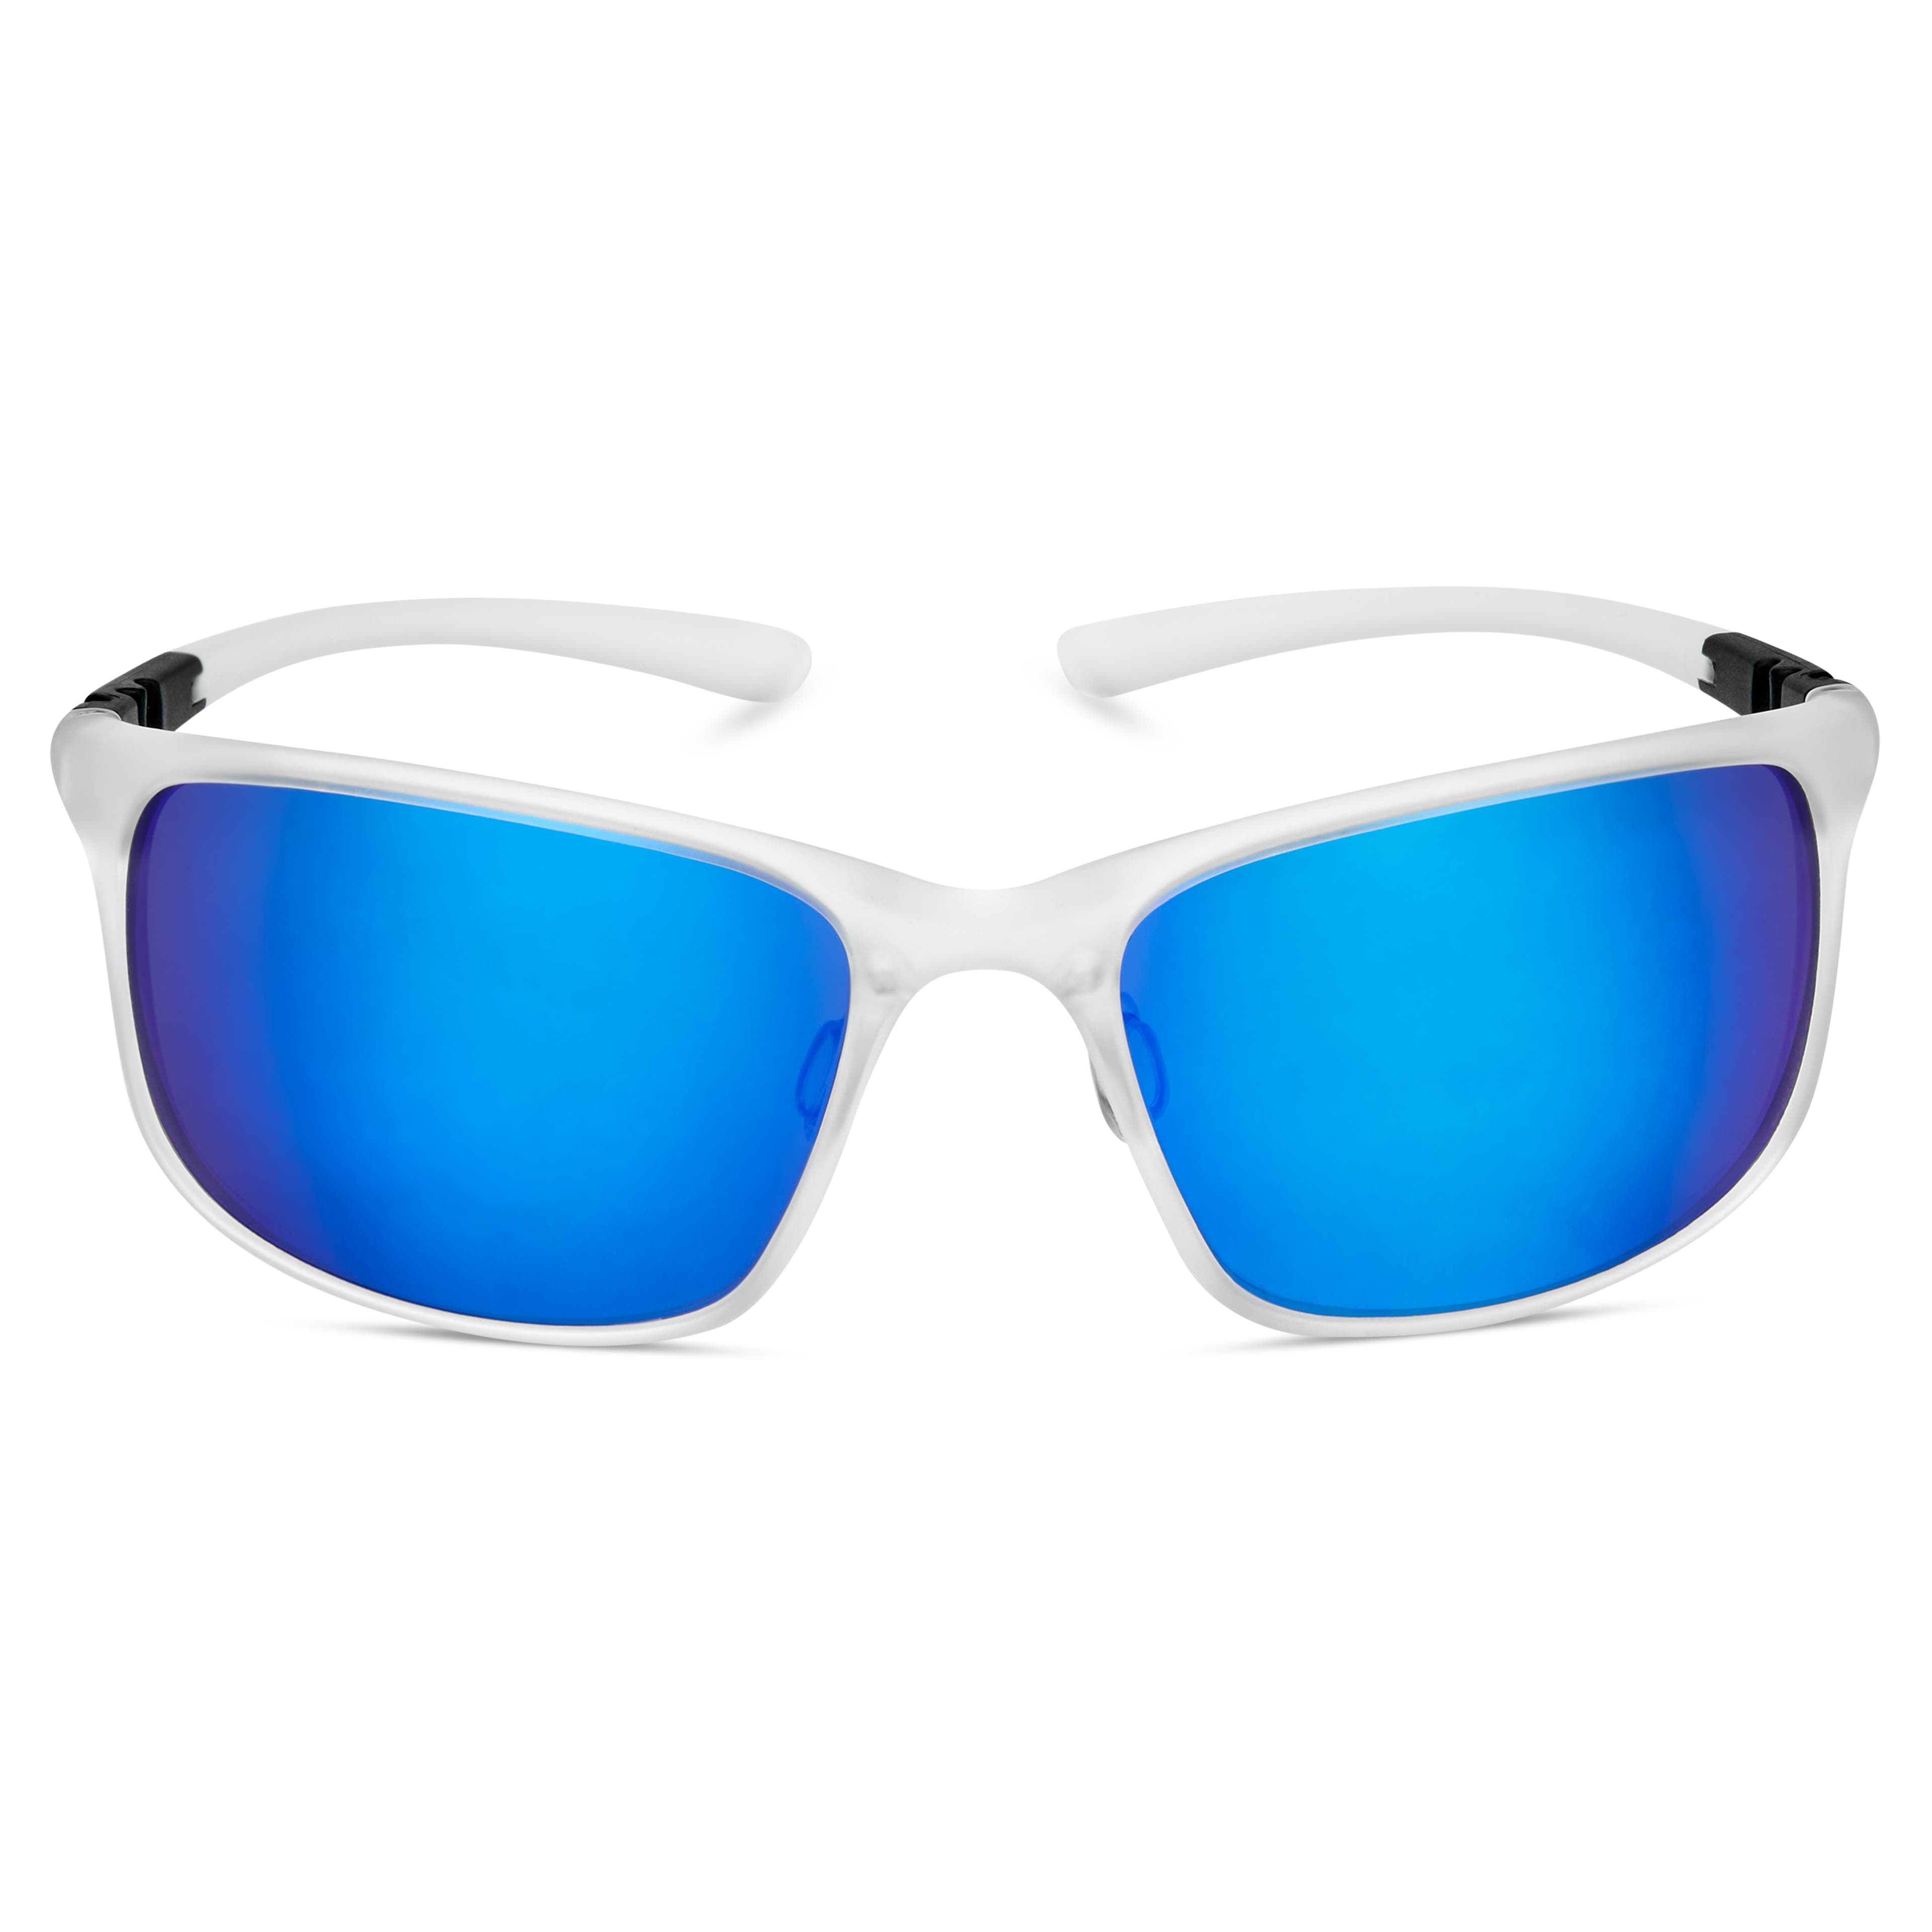 Първокласни спортни слънчеви очила с прозрачни рамки